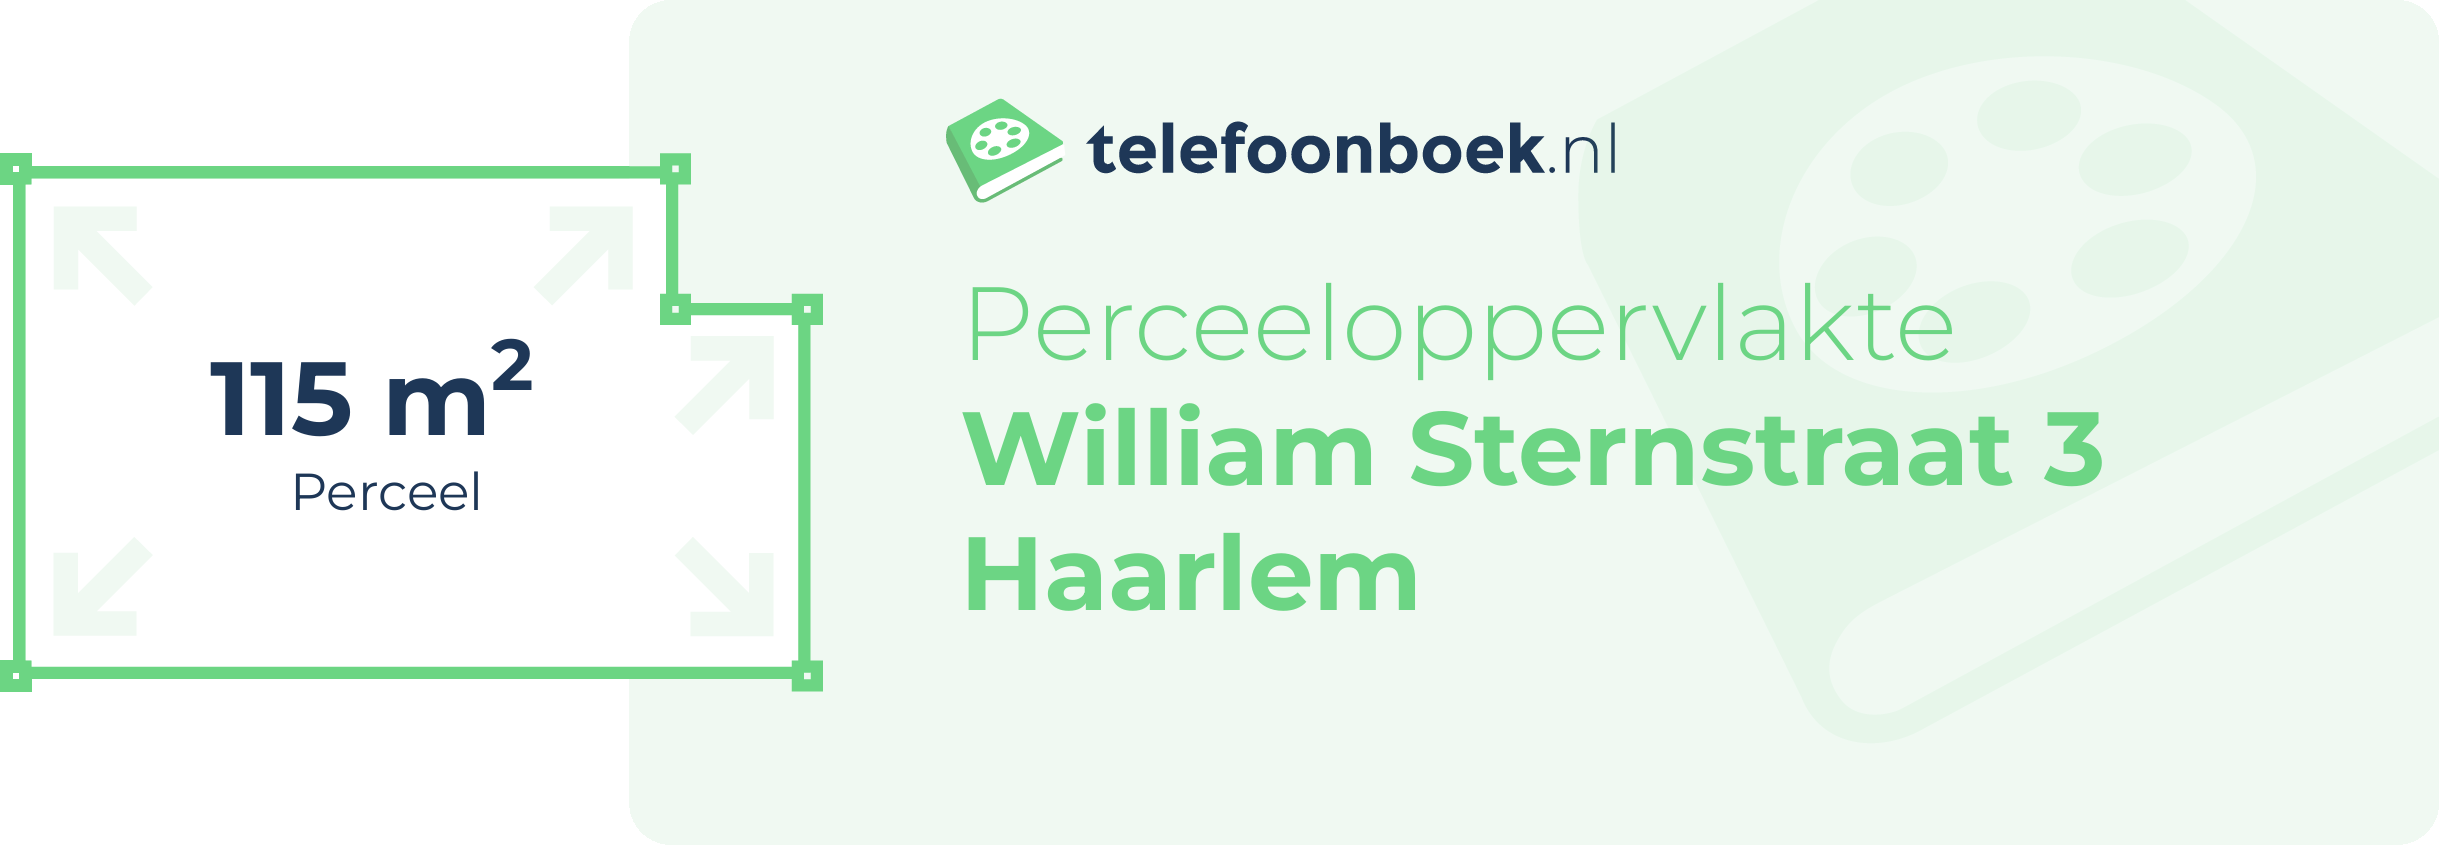 Perceeloppervlakte William Sternstraat 3 Haarlem